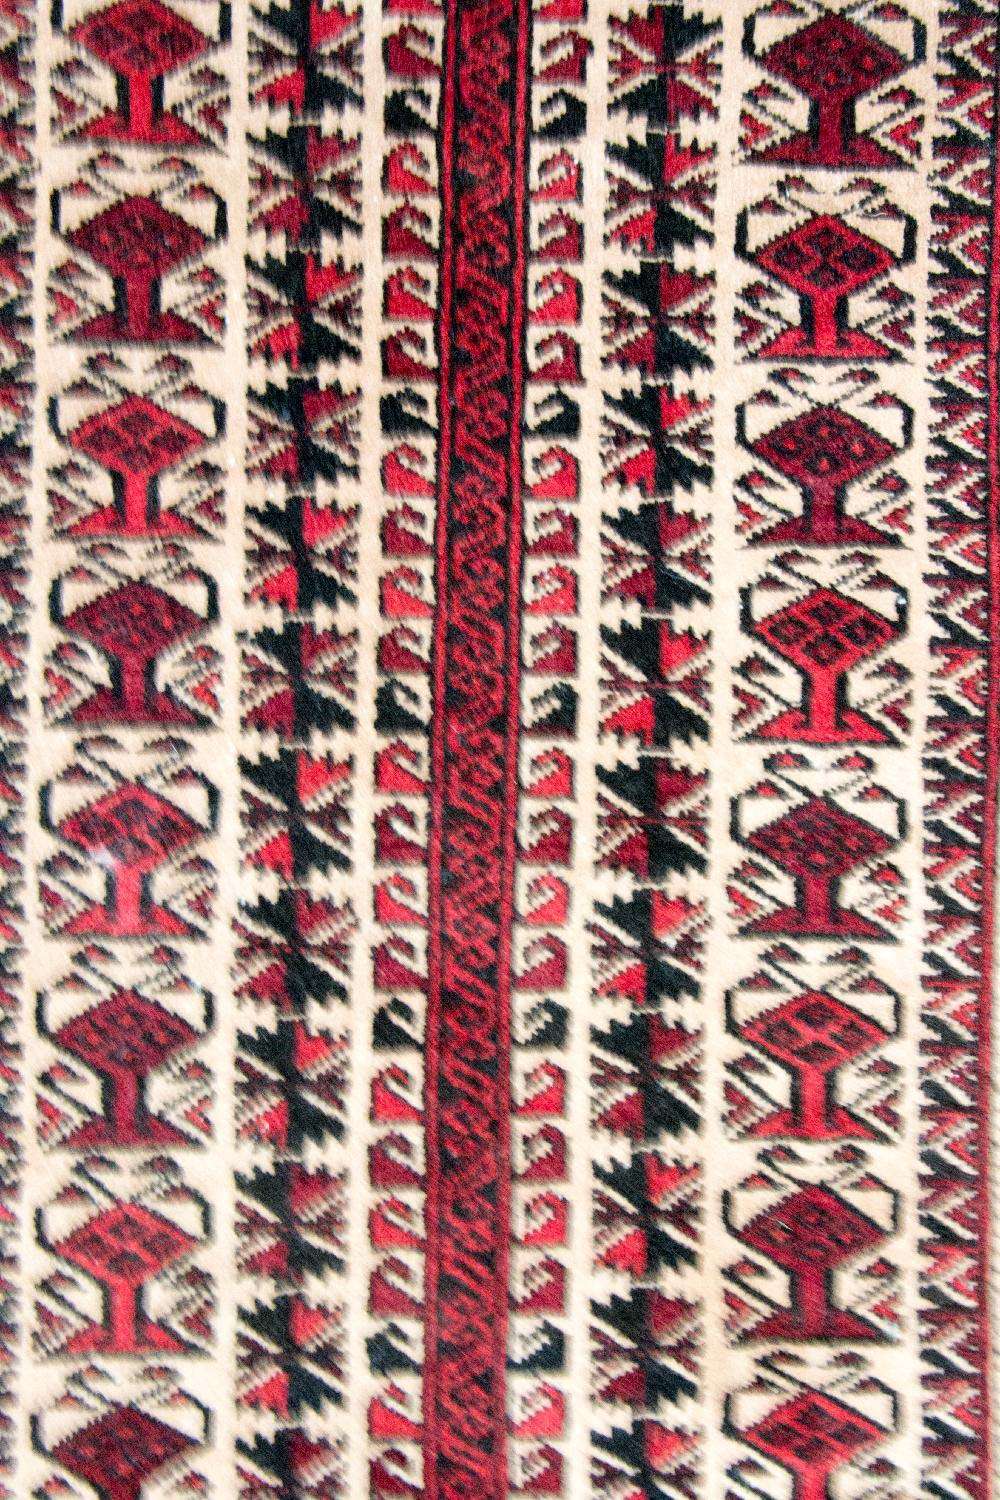 Balutsj-teppe - 129 x 93 cm - rød